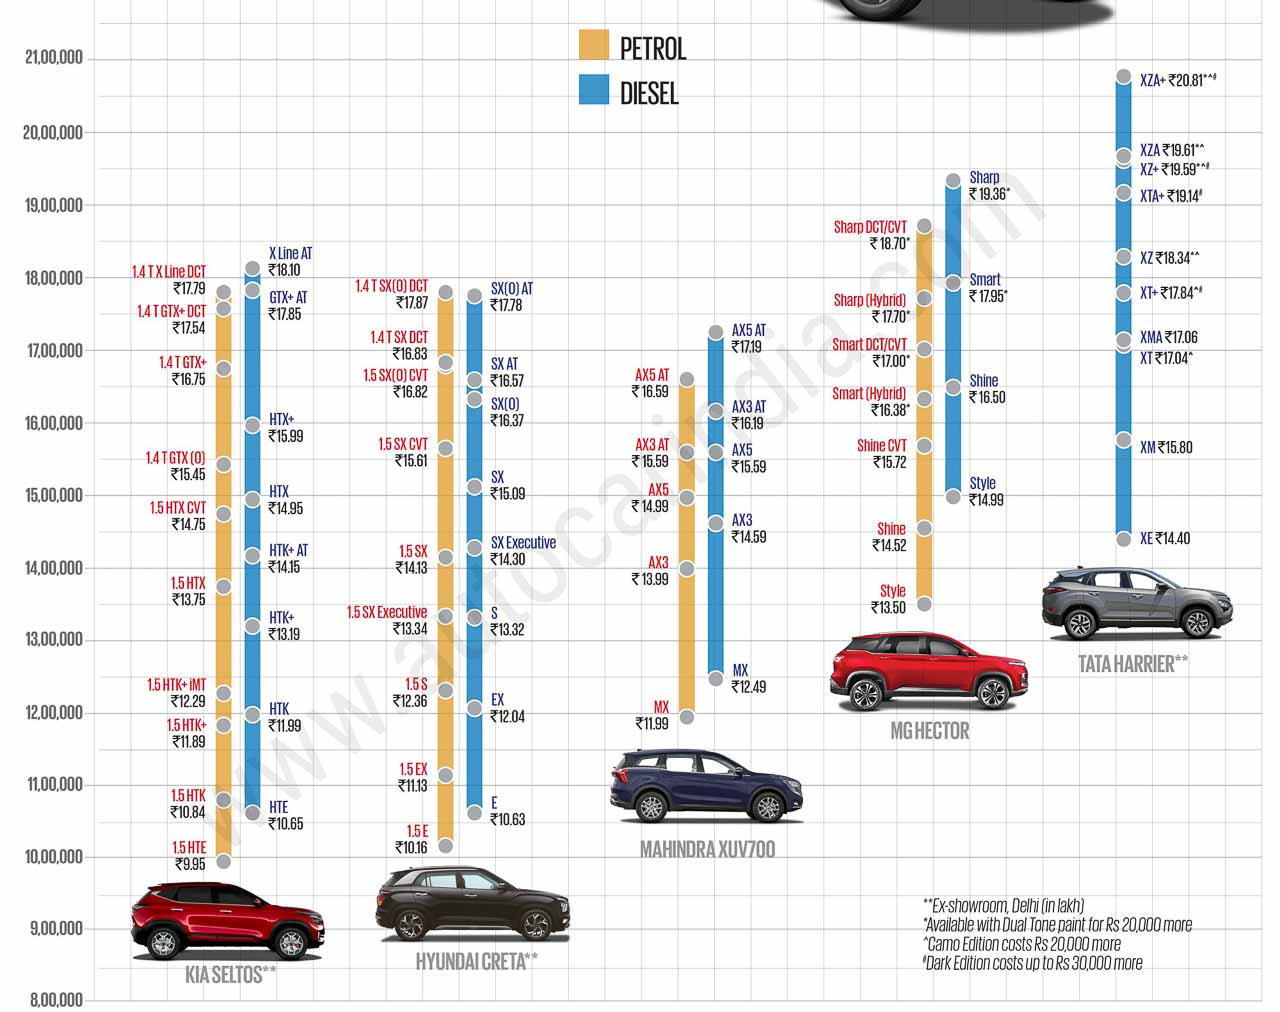 Mahindra XUV700 vs Rivals - Price comparison